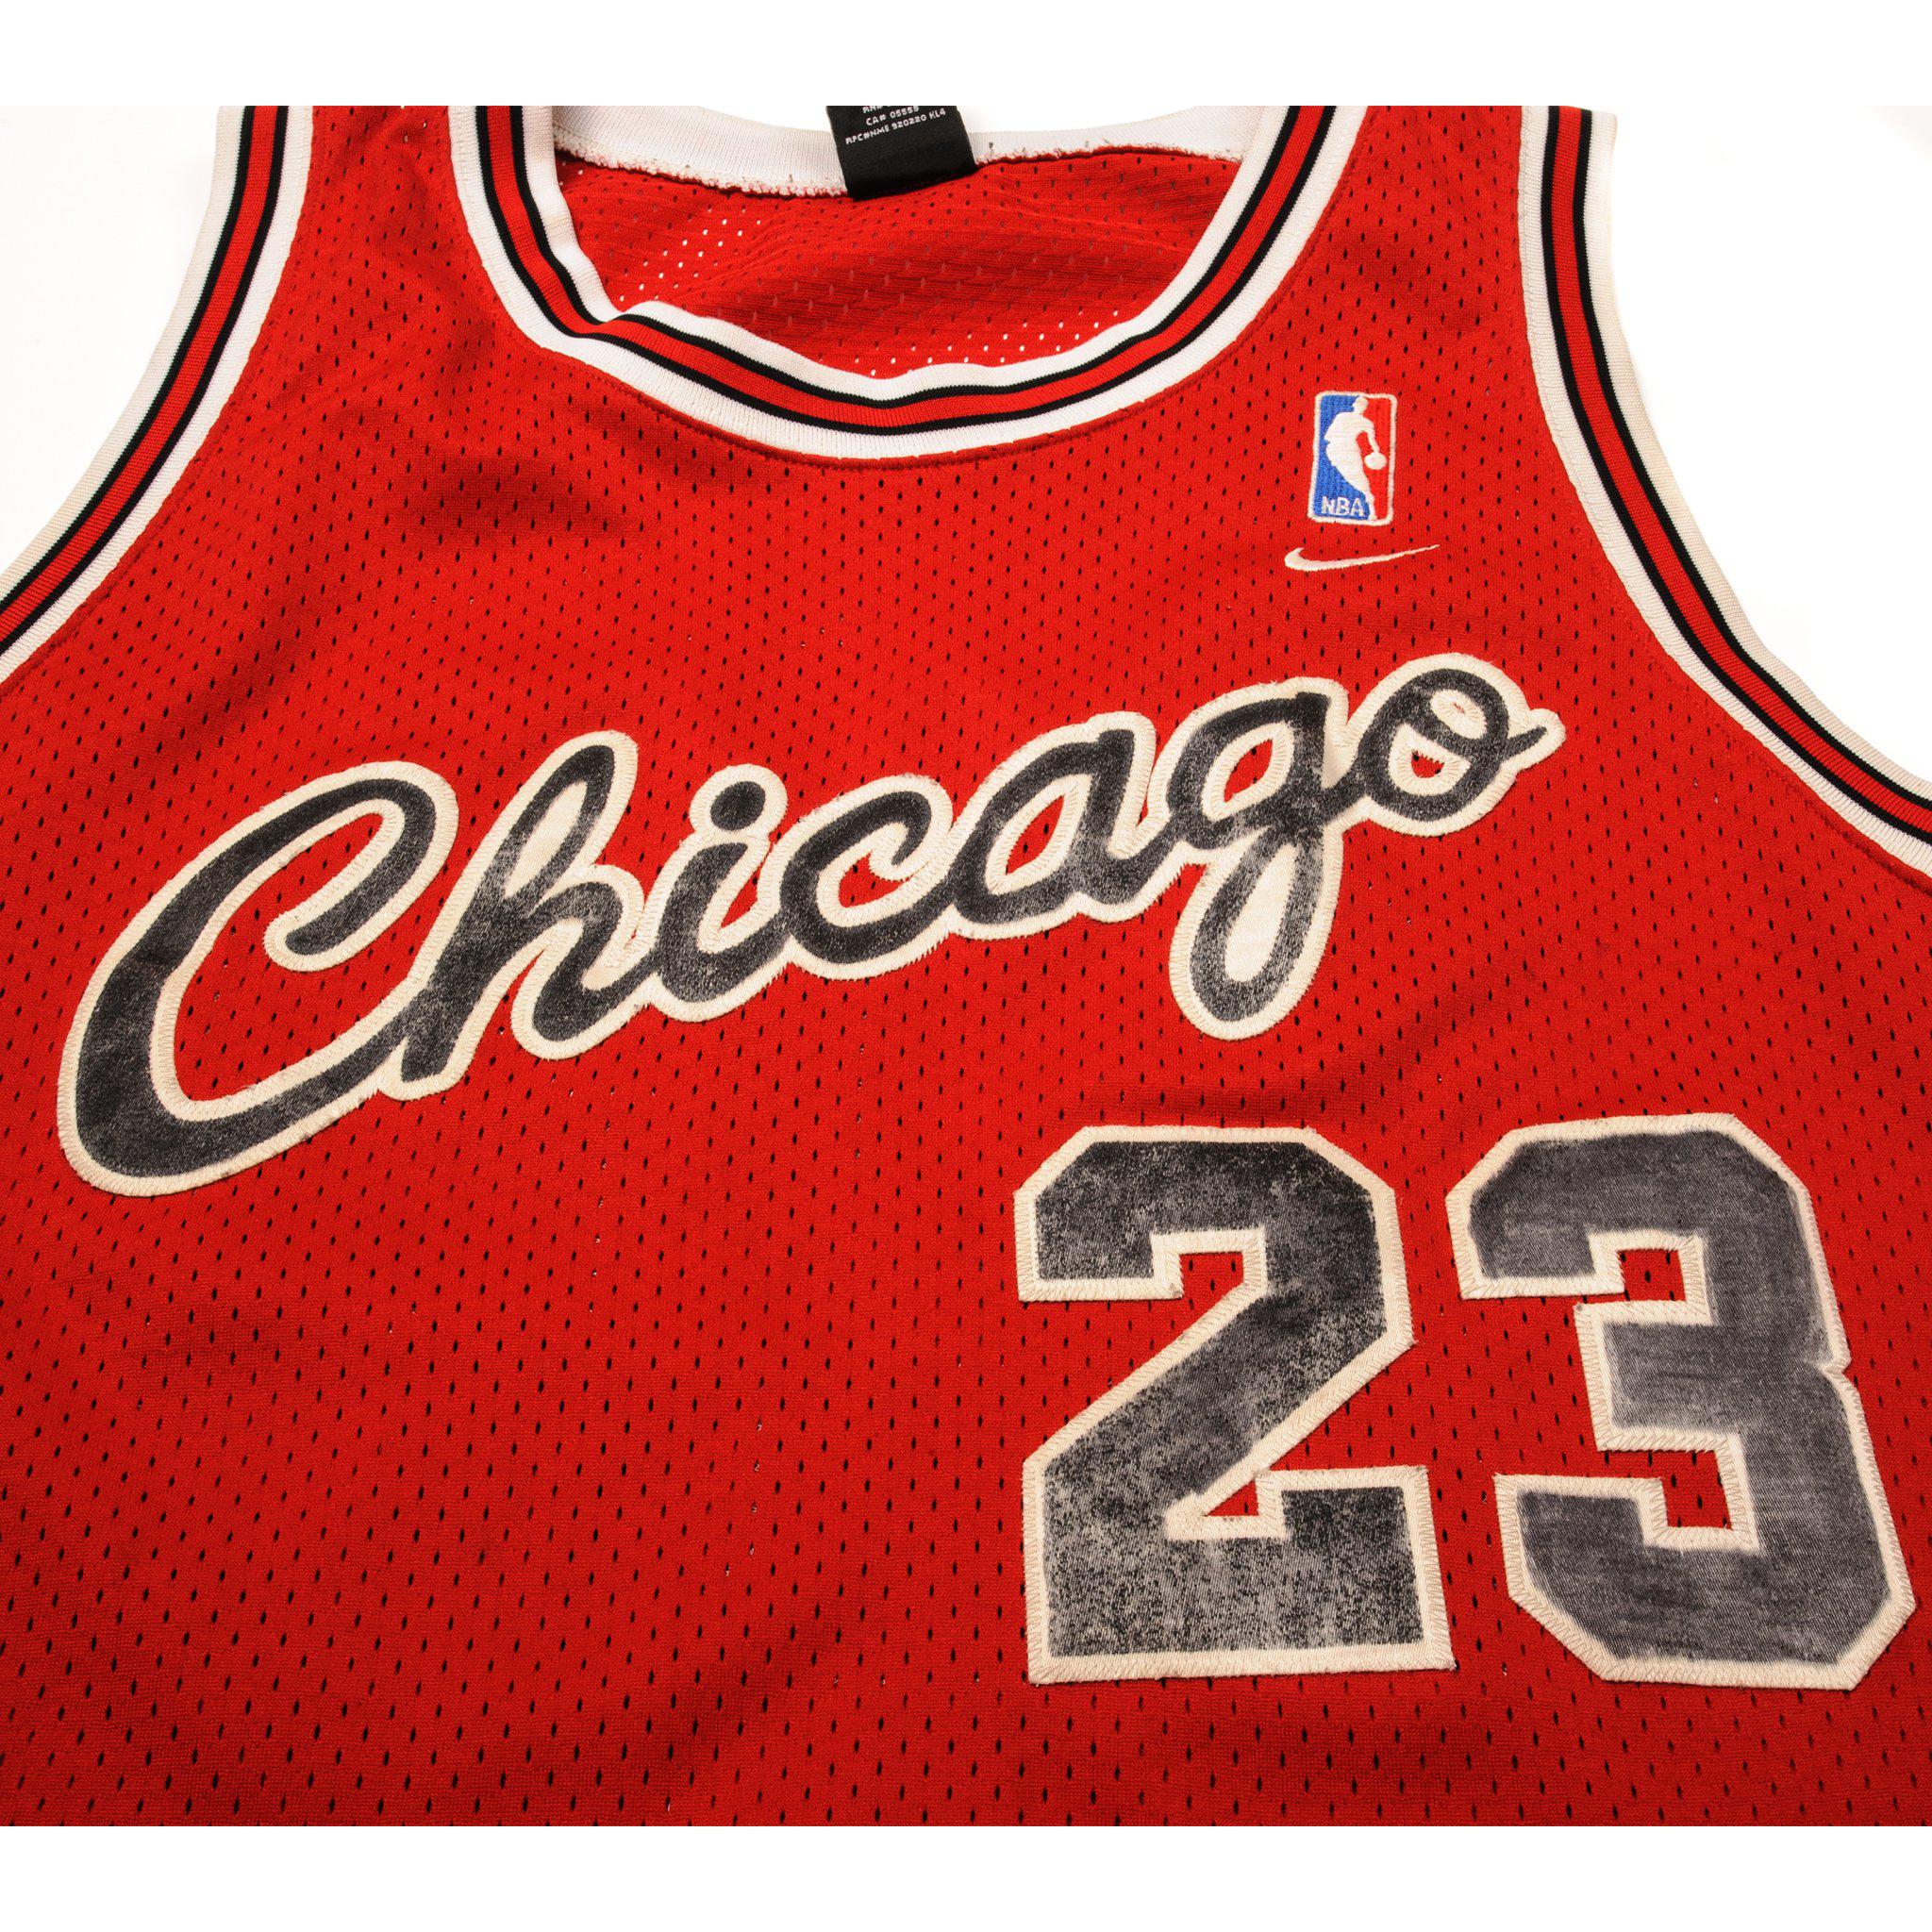 Chicago Bulls Michael Jordan #23 NBA 1984 Nike Flight 8403 Black Red Jersey  54